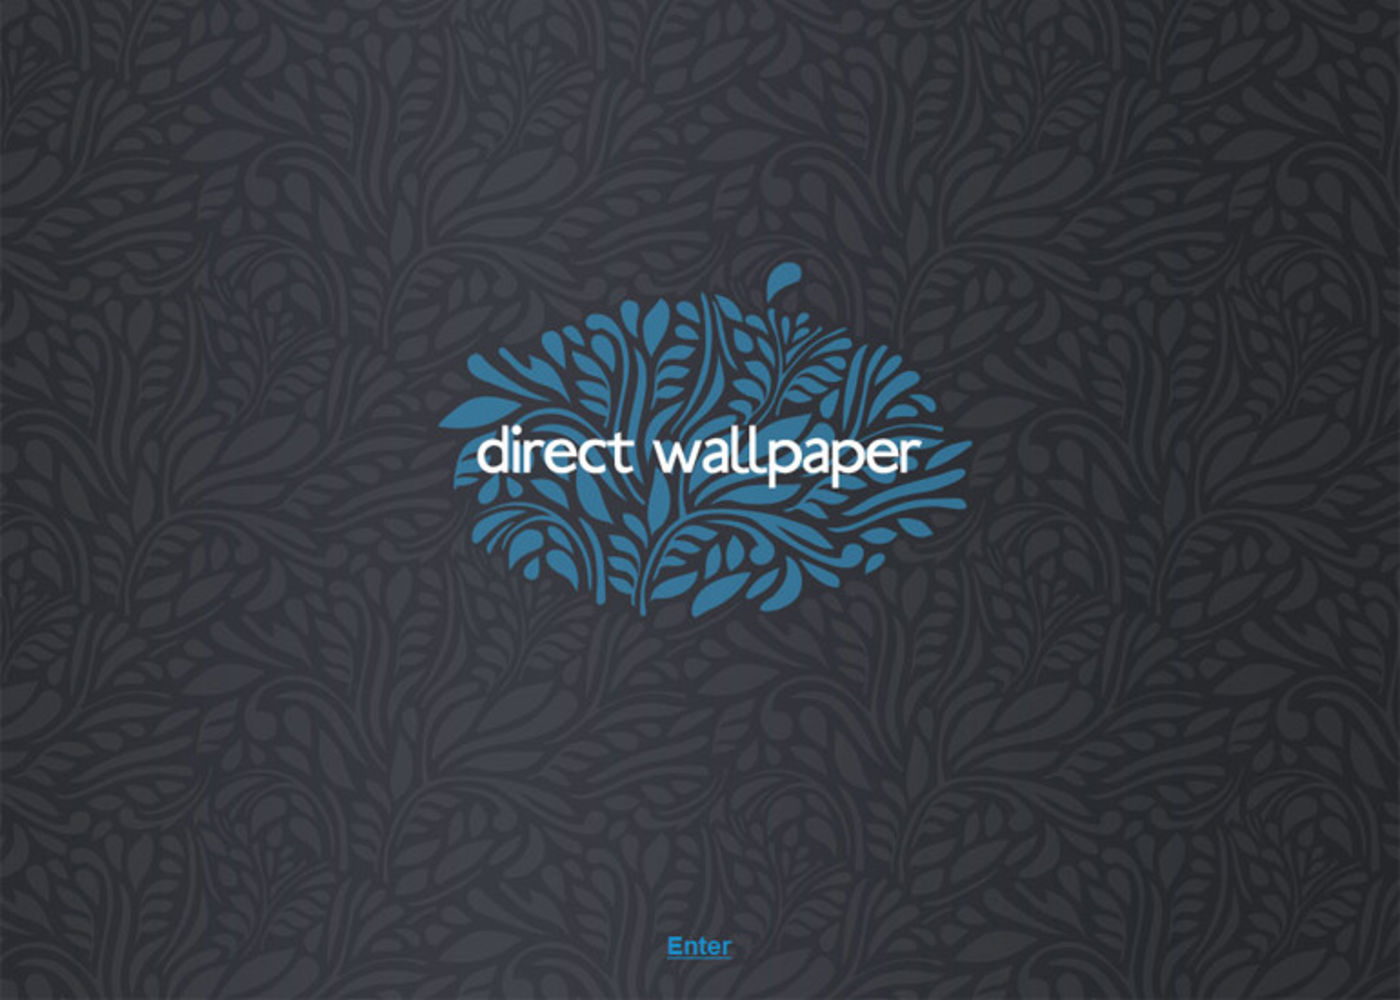 Direct Wallpaper Welcome - Direct Wallpaper